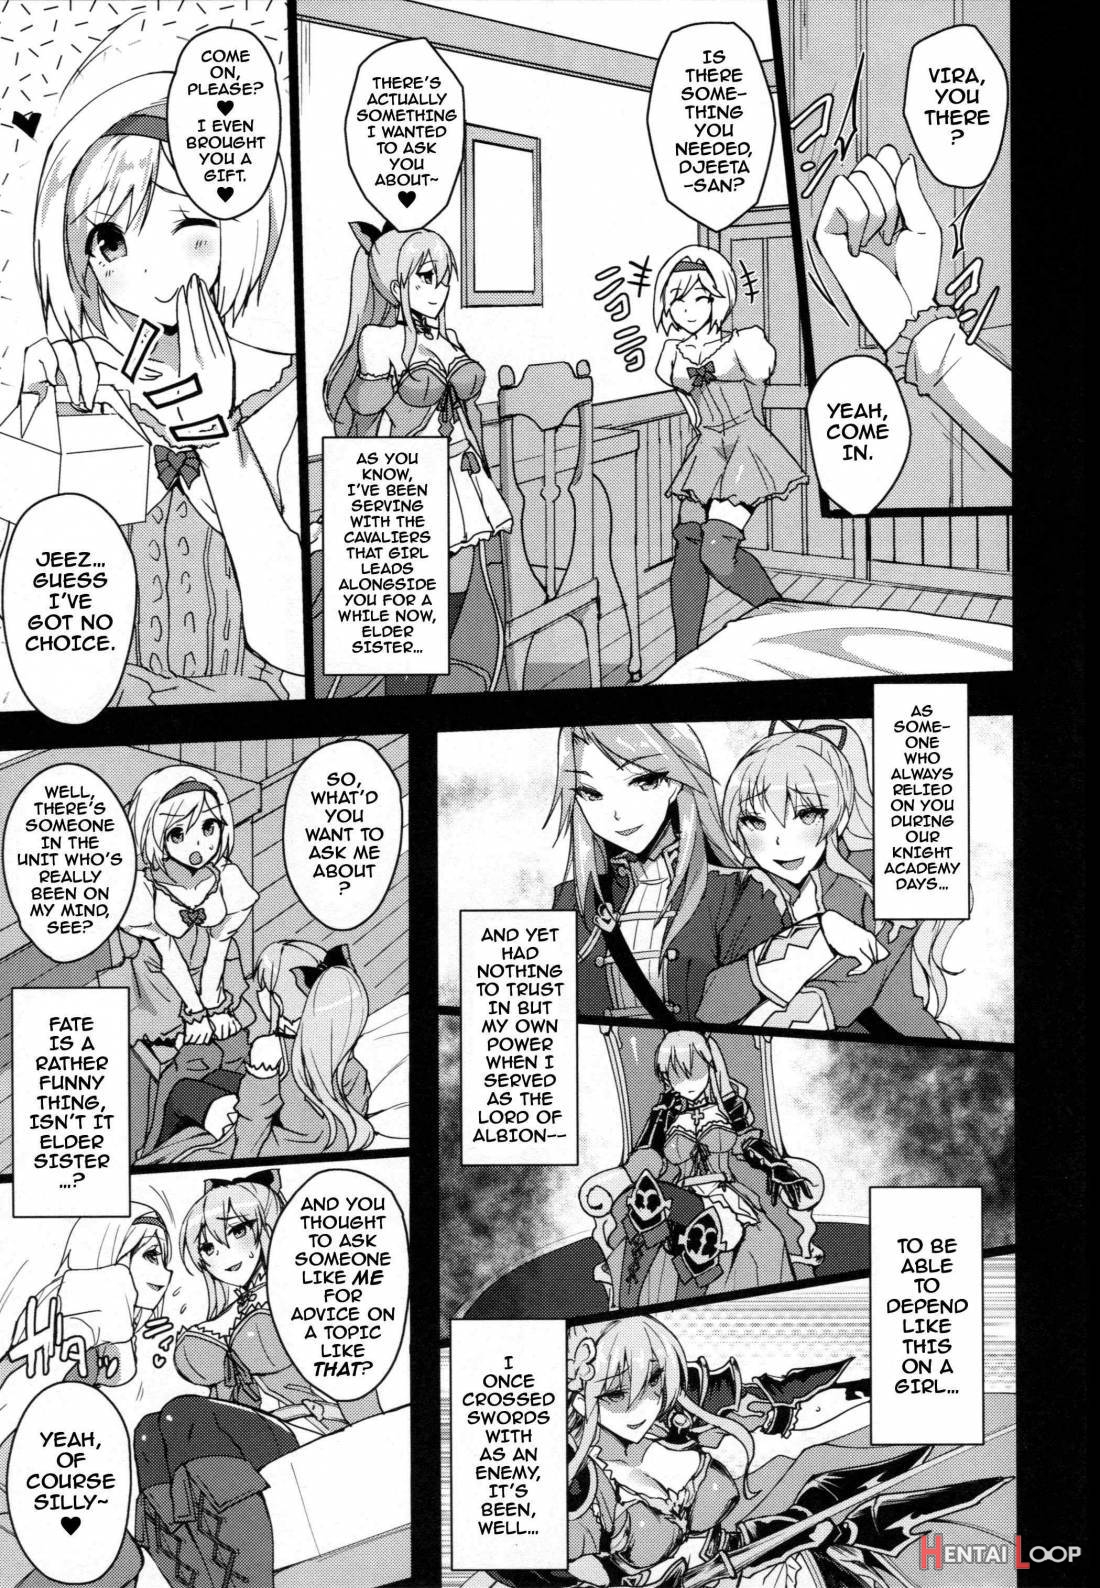 Vira’s Pleasure Training Chronicles page 2